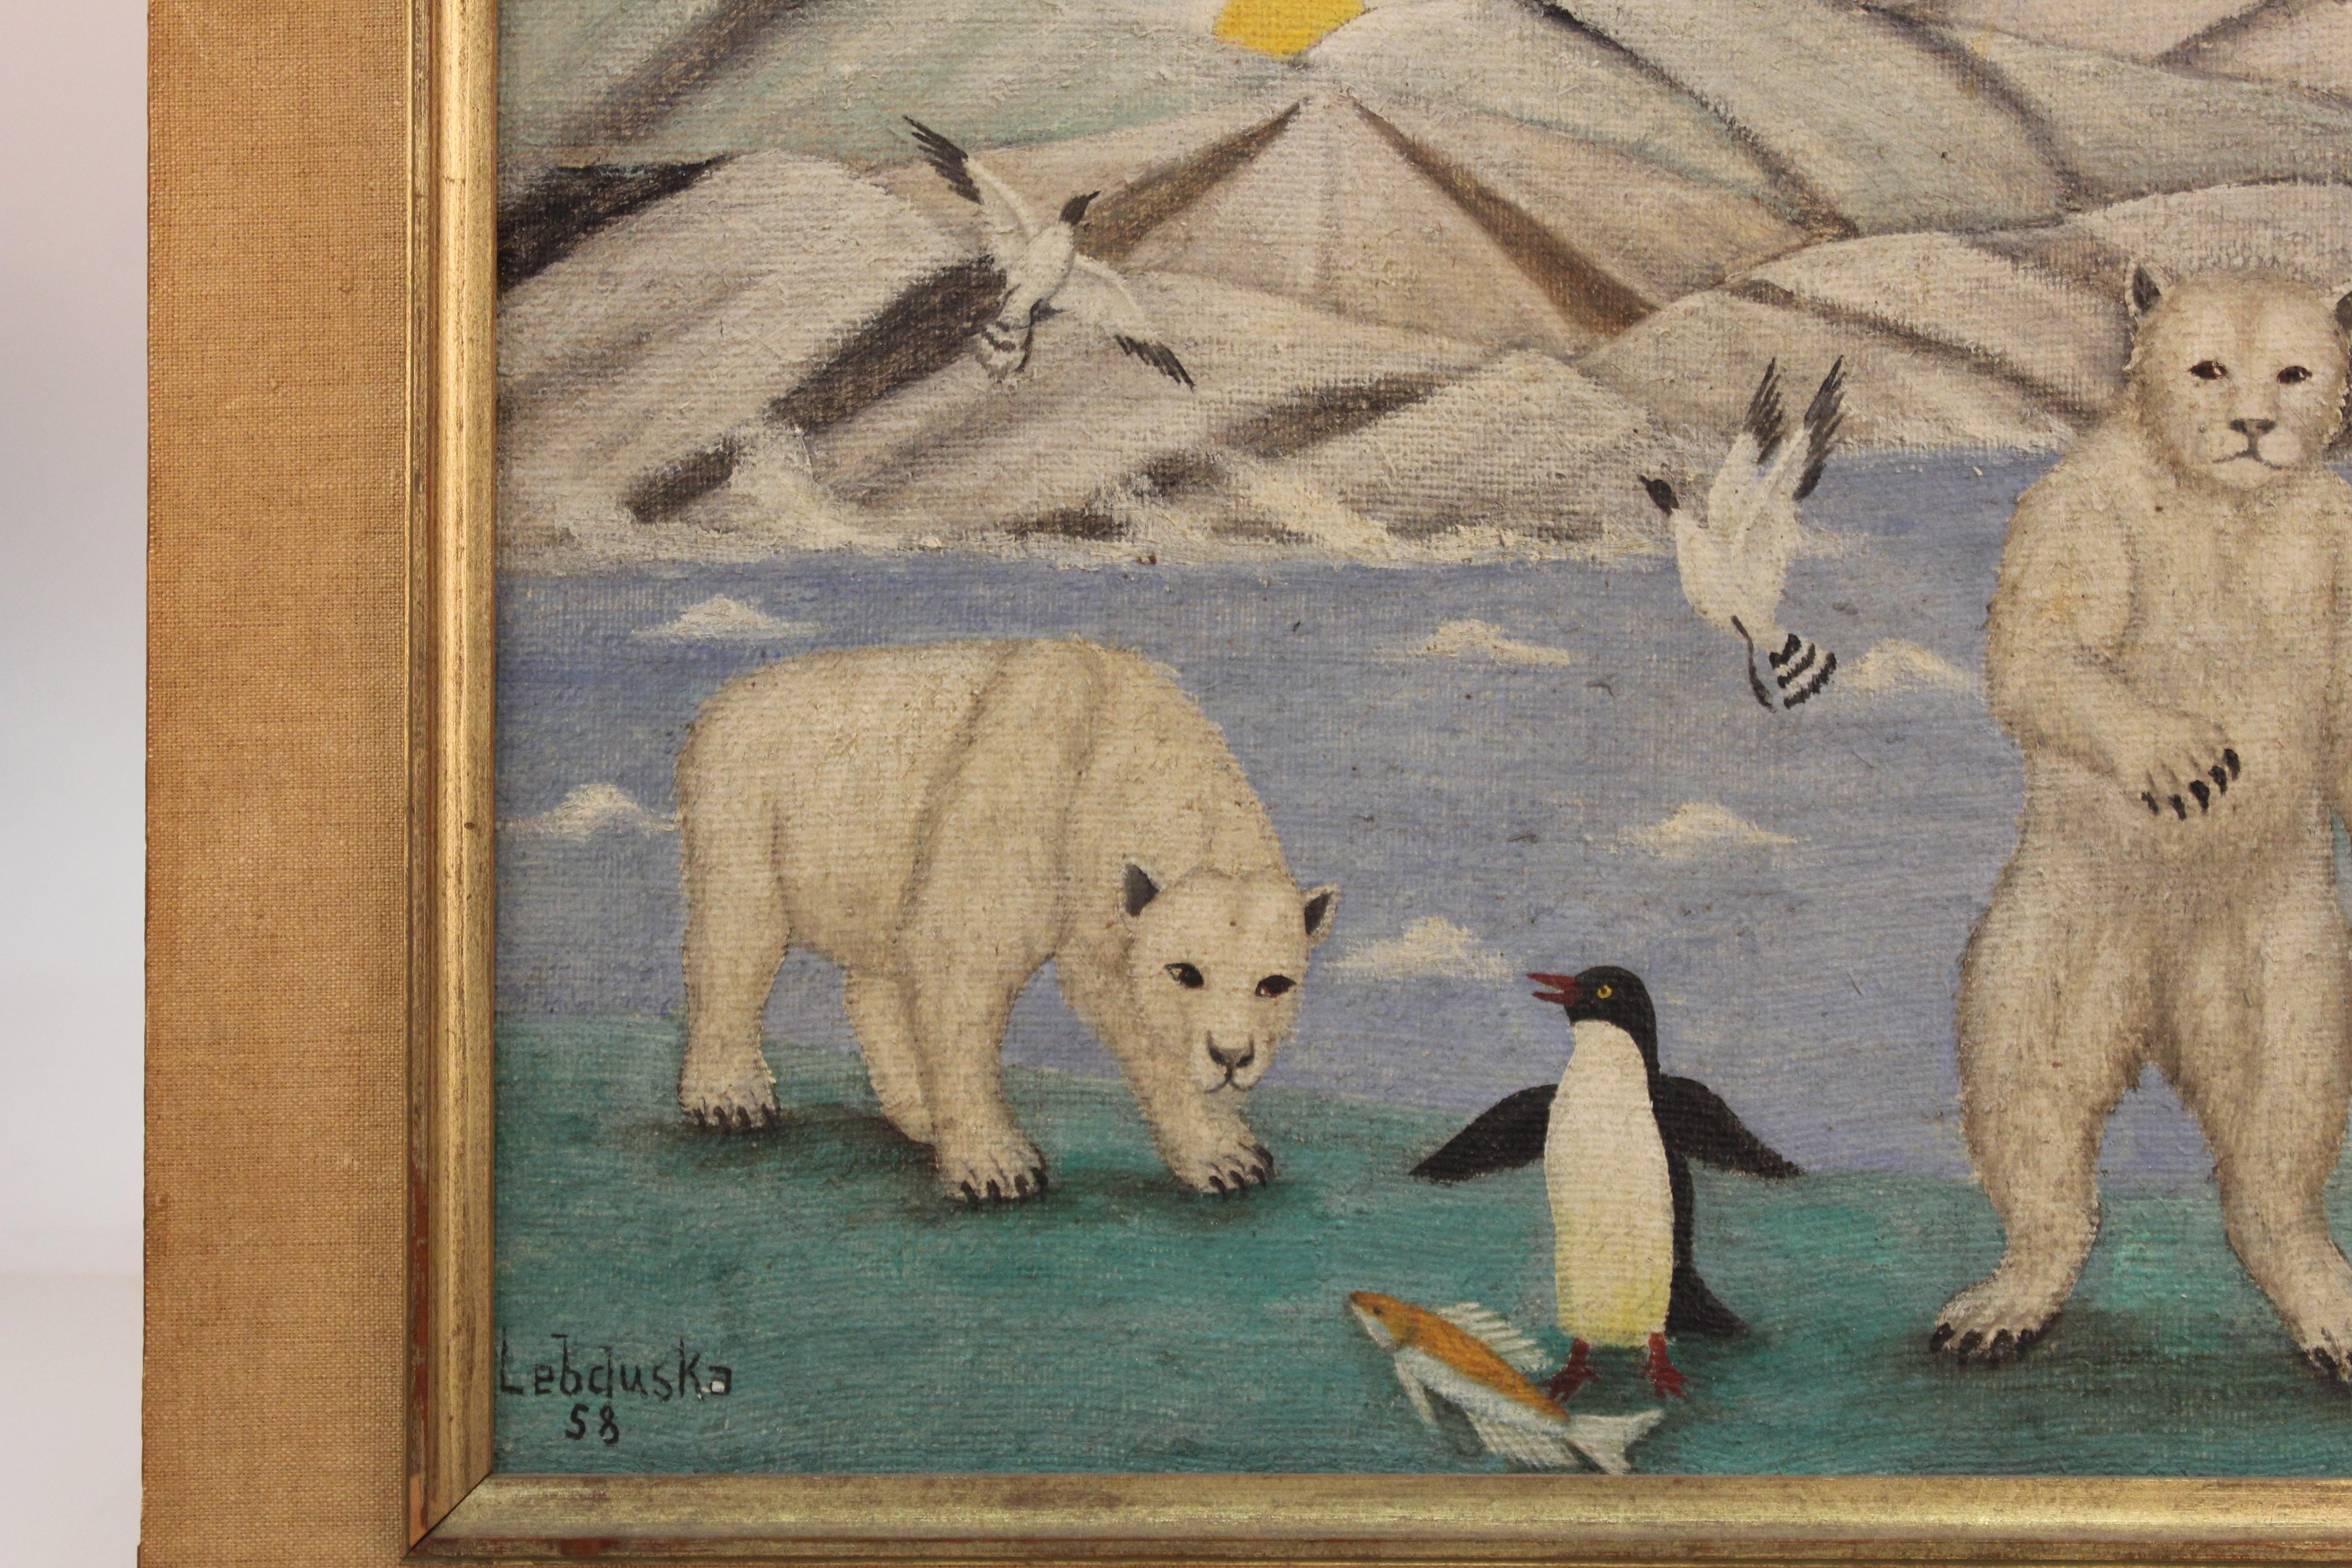 Painted Lawrence Lebduska American Folk Art Painting with Polar Bears & Penguin